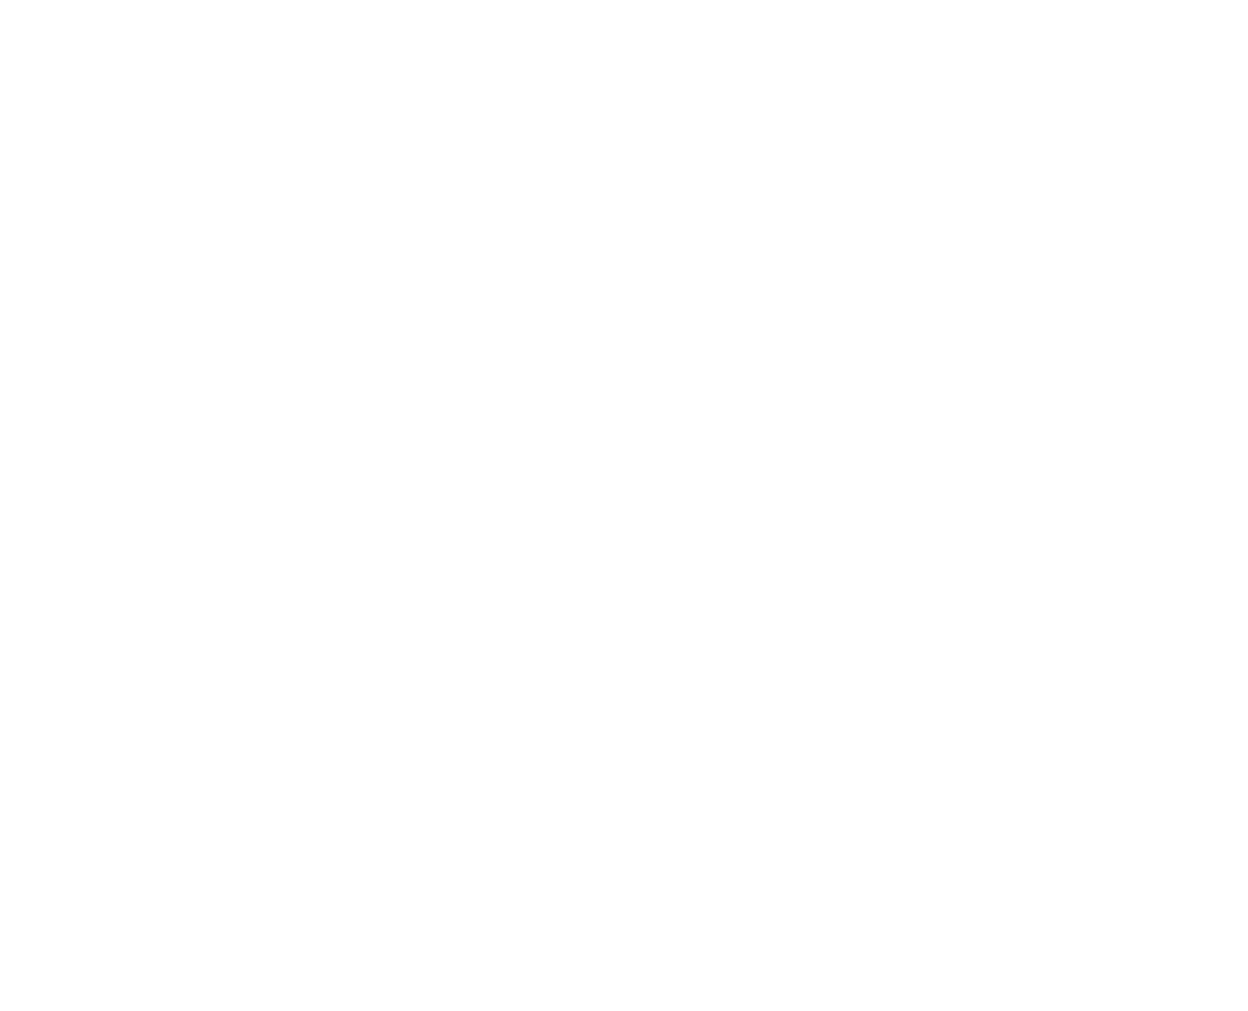 JulieL